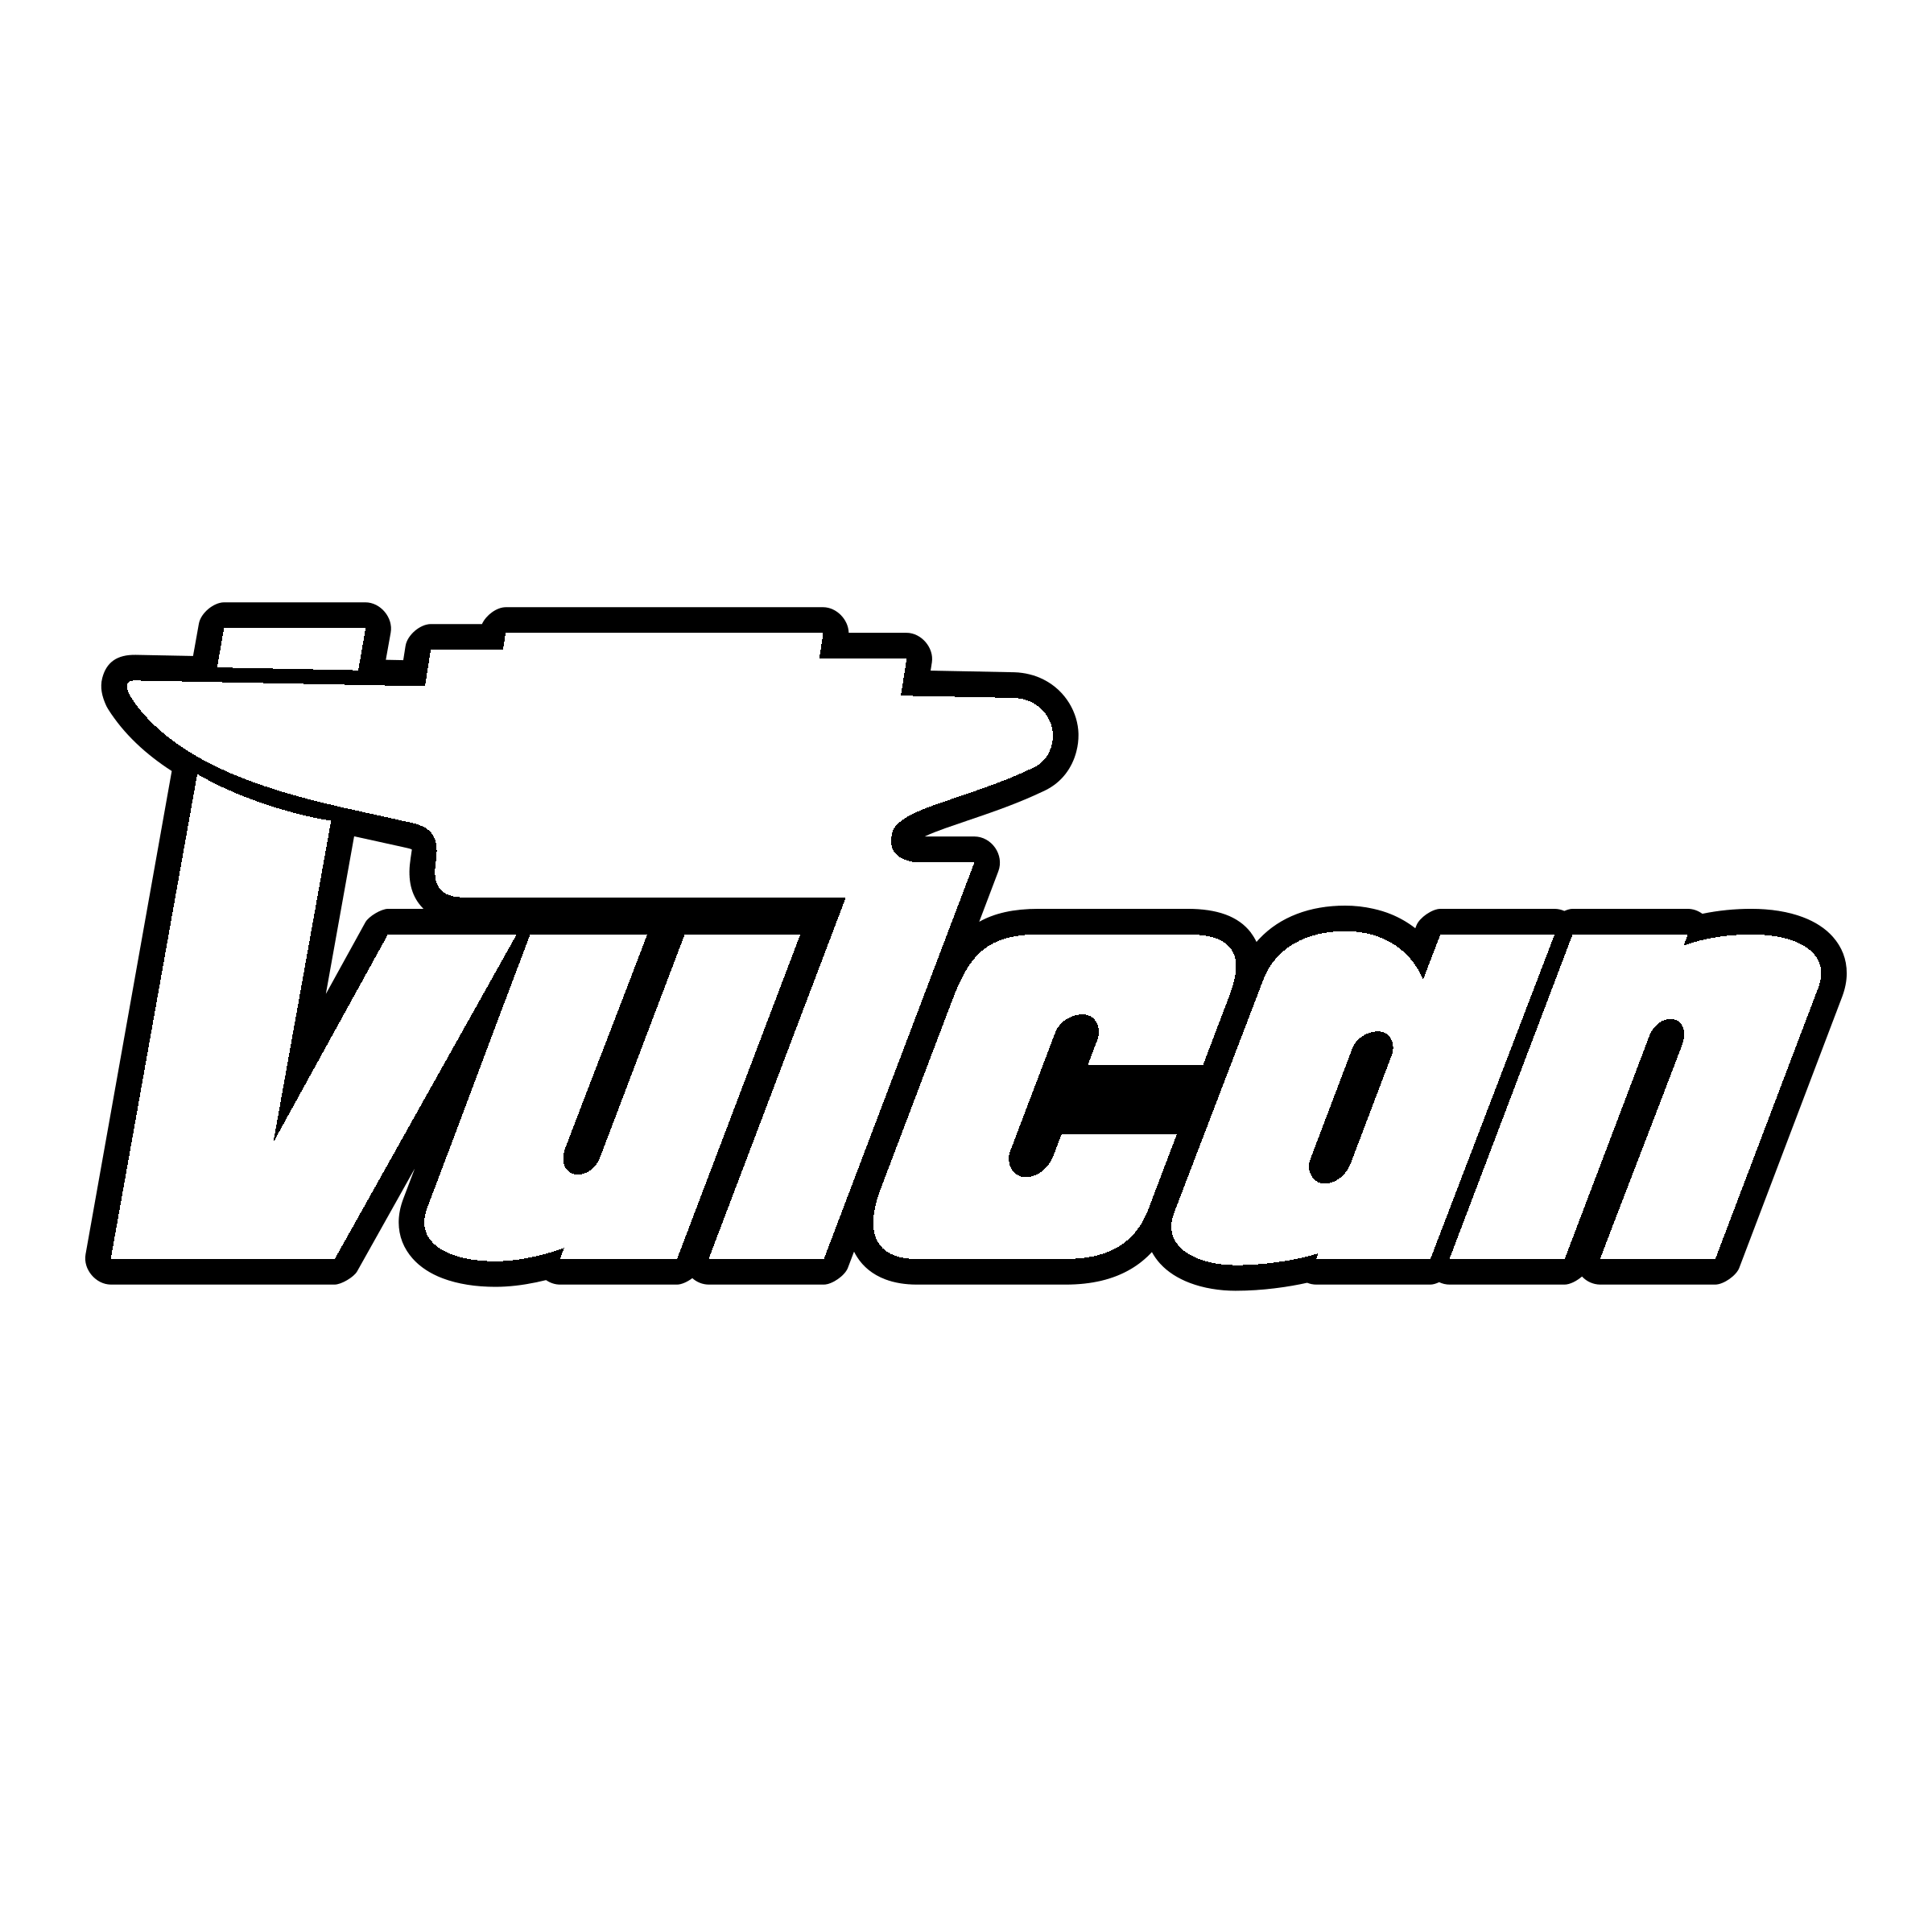 Vulcan Logo - Vulcan Logo PNG Transparent & SVG Vector - Freebie Supply